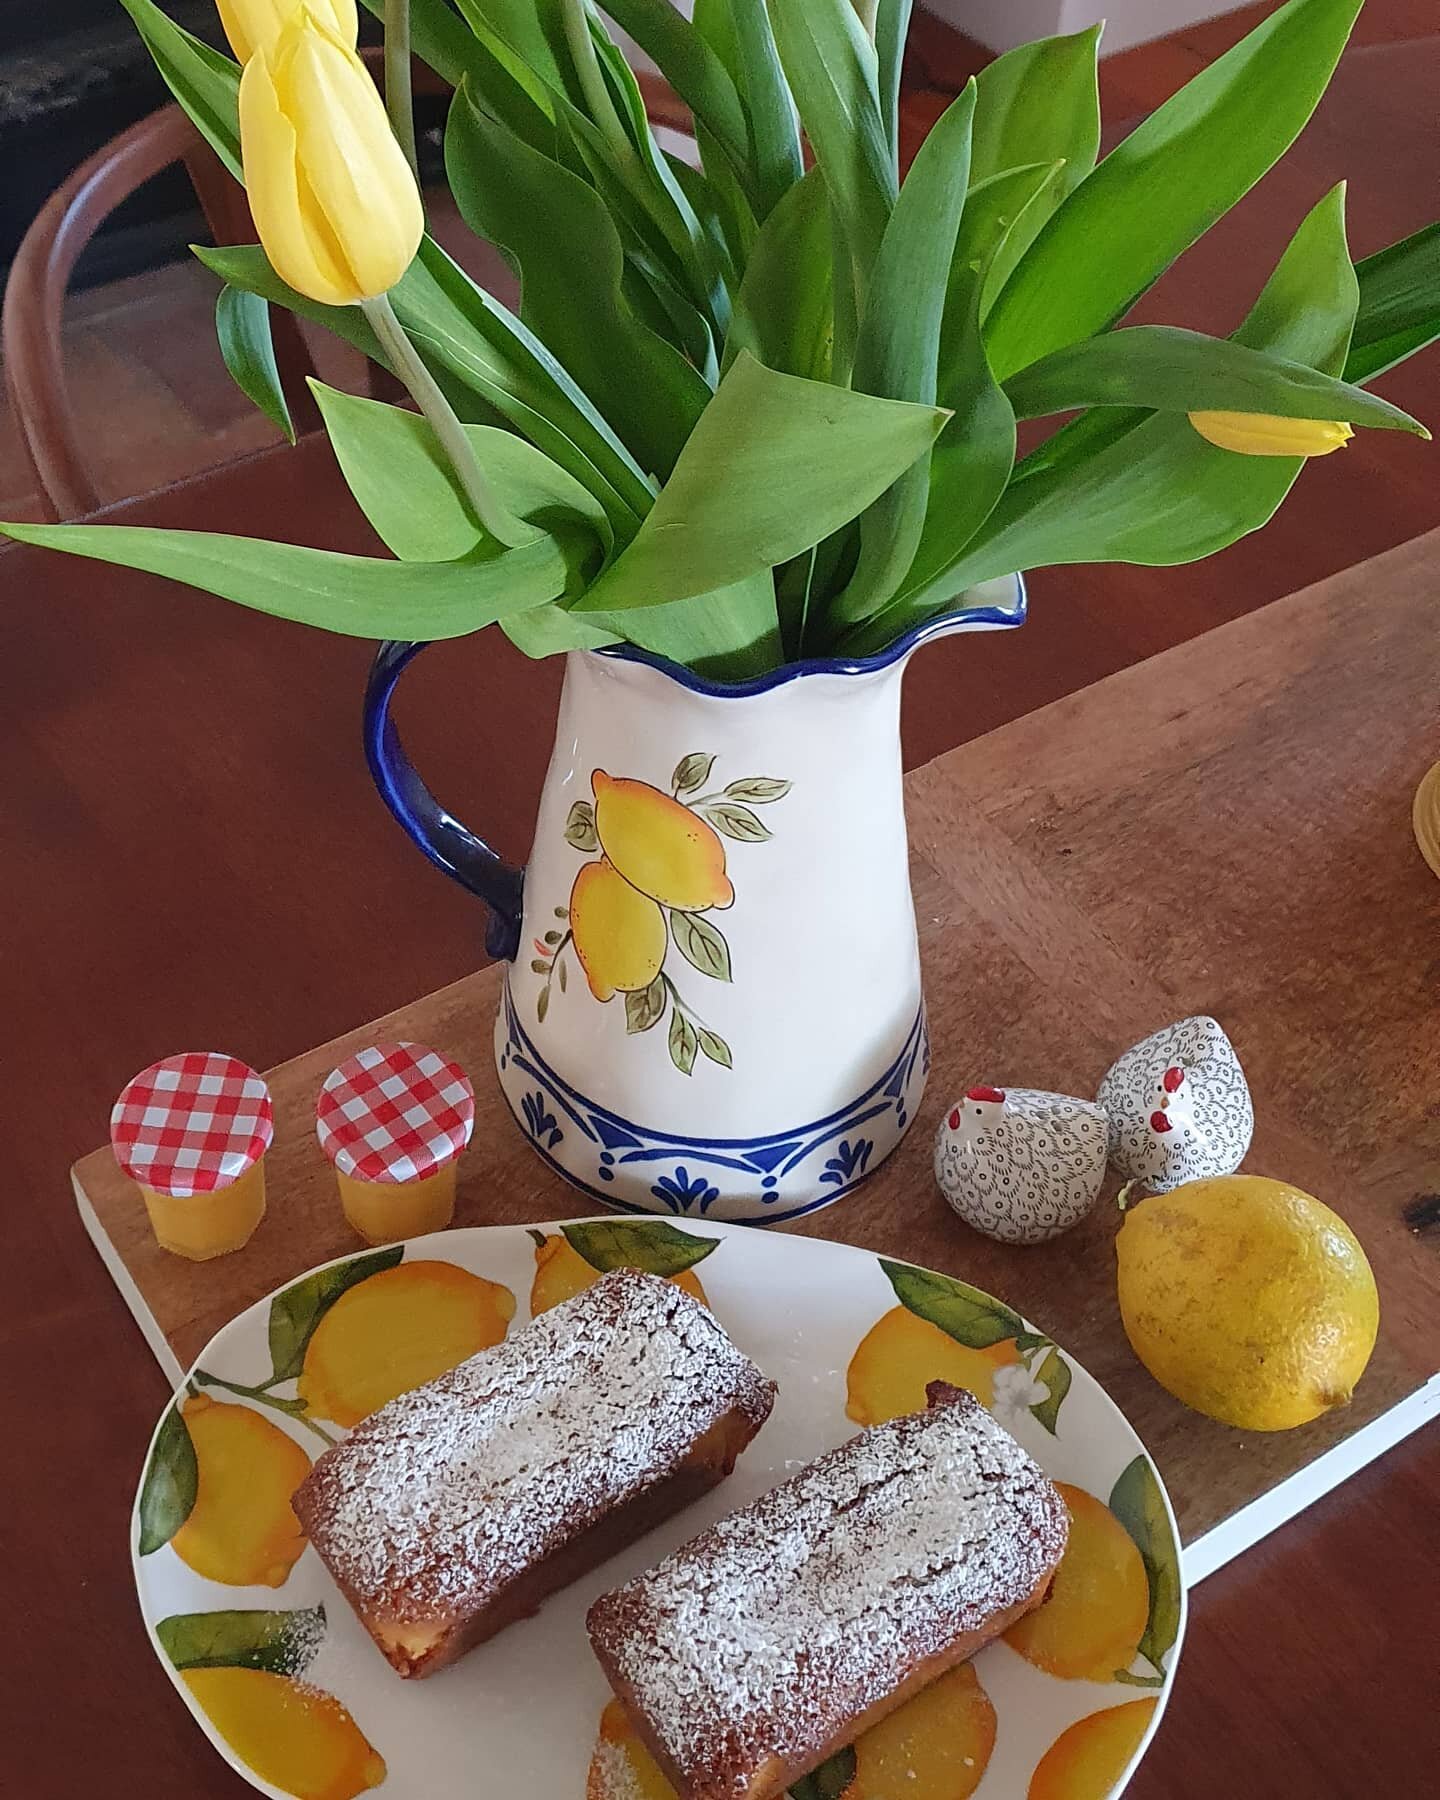 Just love lemon. #homegrown #homemade  Gf lemon cake for our Cottage Guests #lemoncurd 
#lifeonthefarm